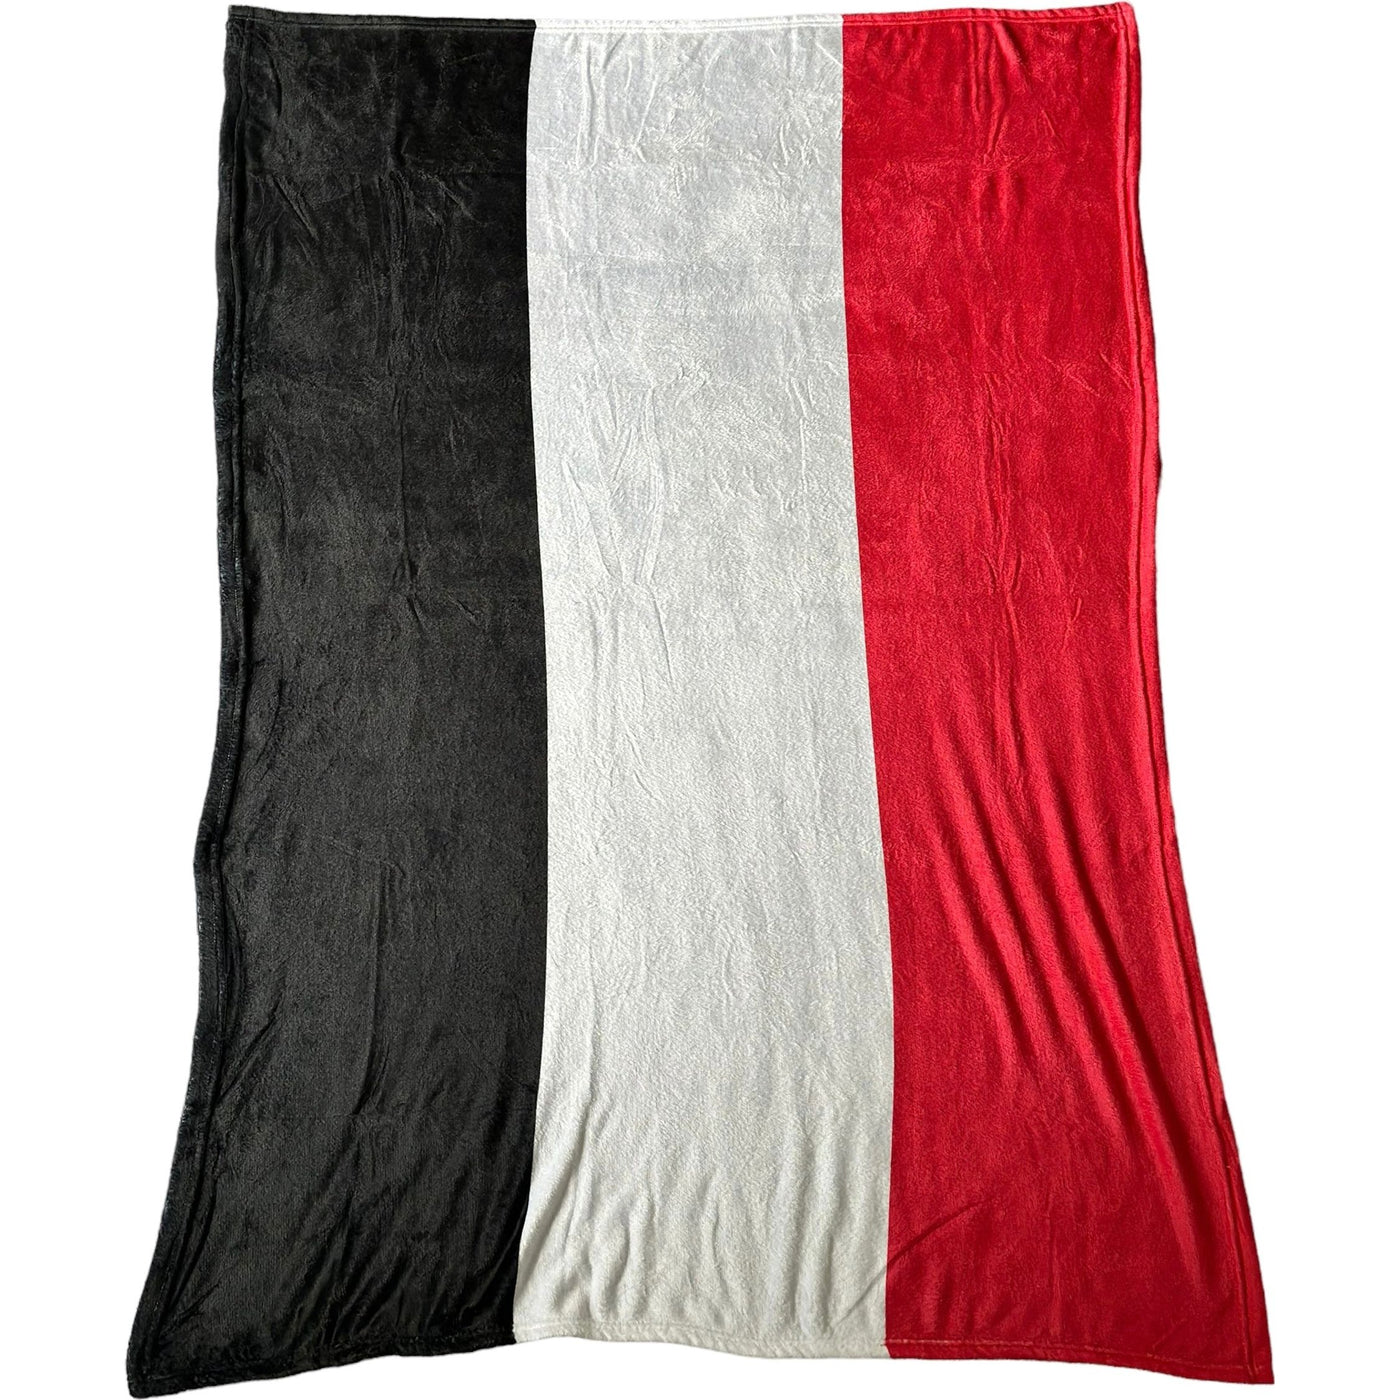 Yemen Flag Throw Blanket